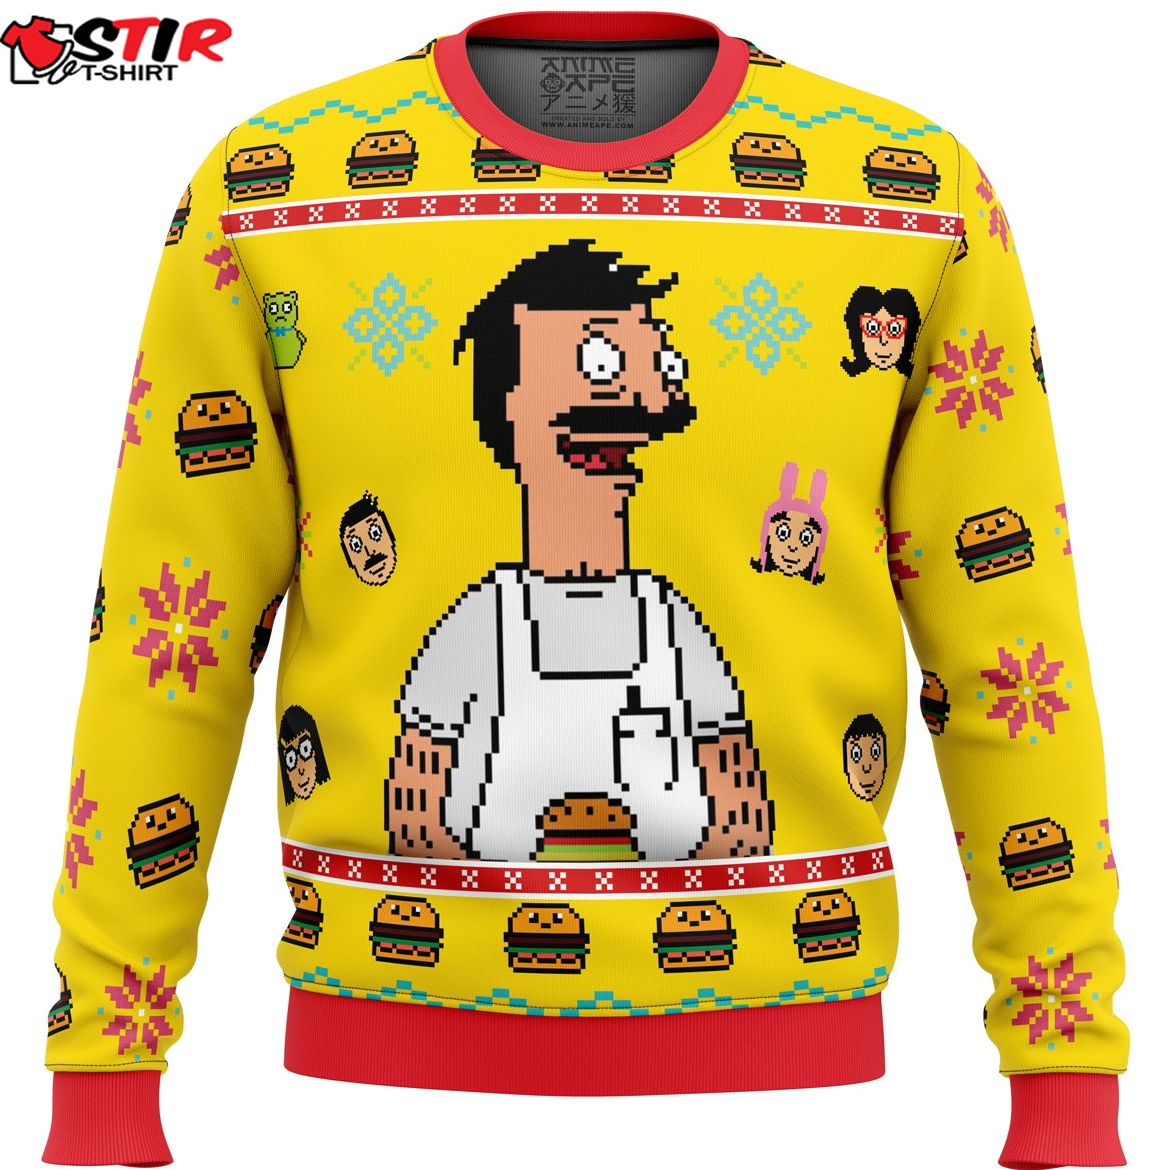 BobS Burgers Ugly Christmas Sweater Stirtshirt